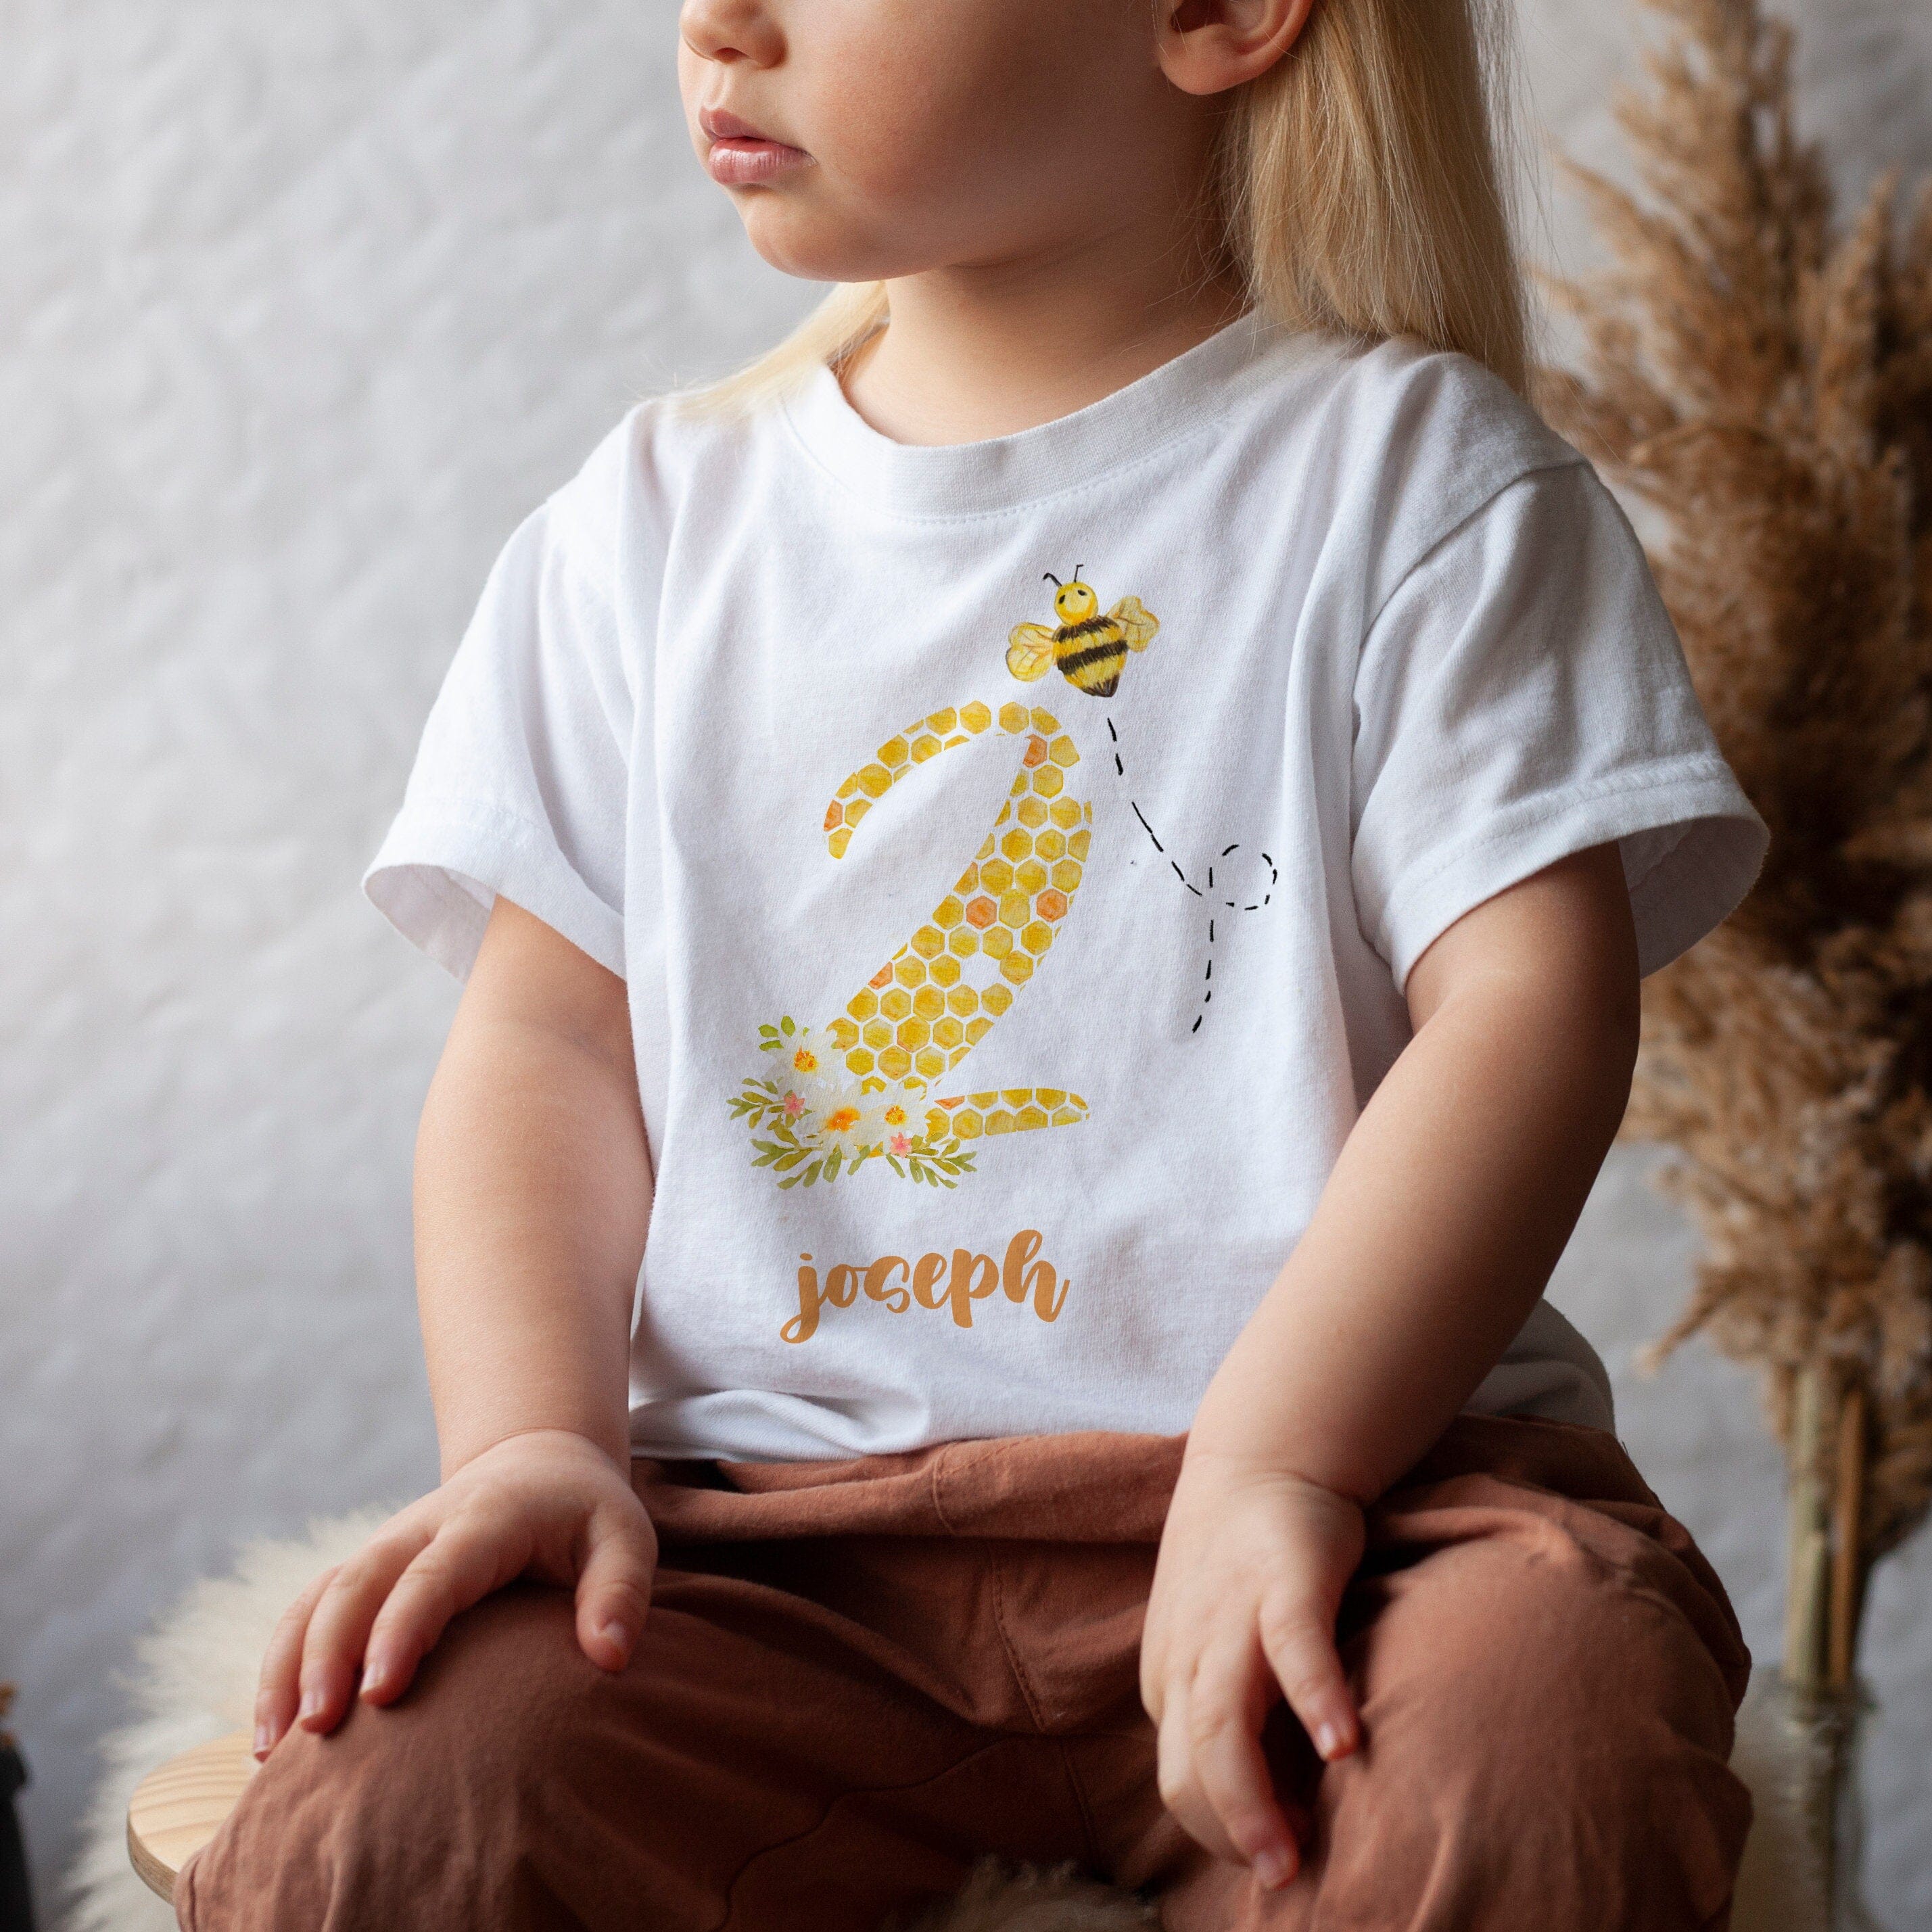 Personalised bee design kids birthday t-shirt, Boy girl tshirt top, Name is One